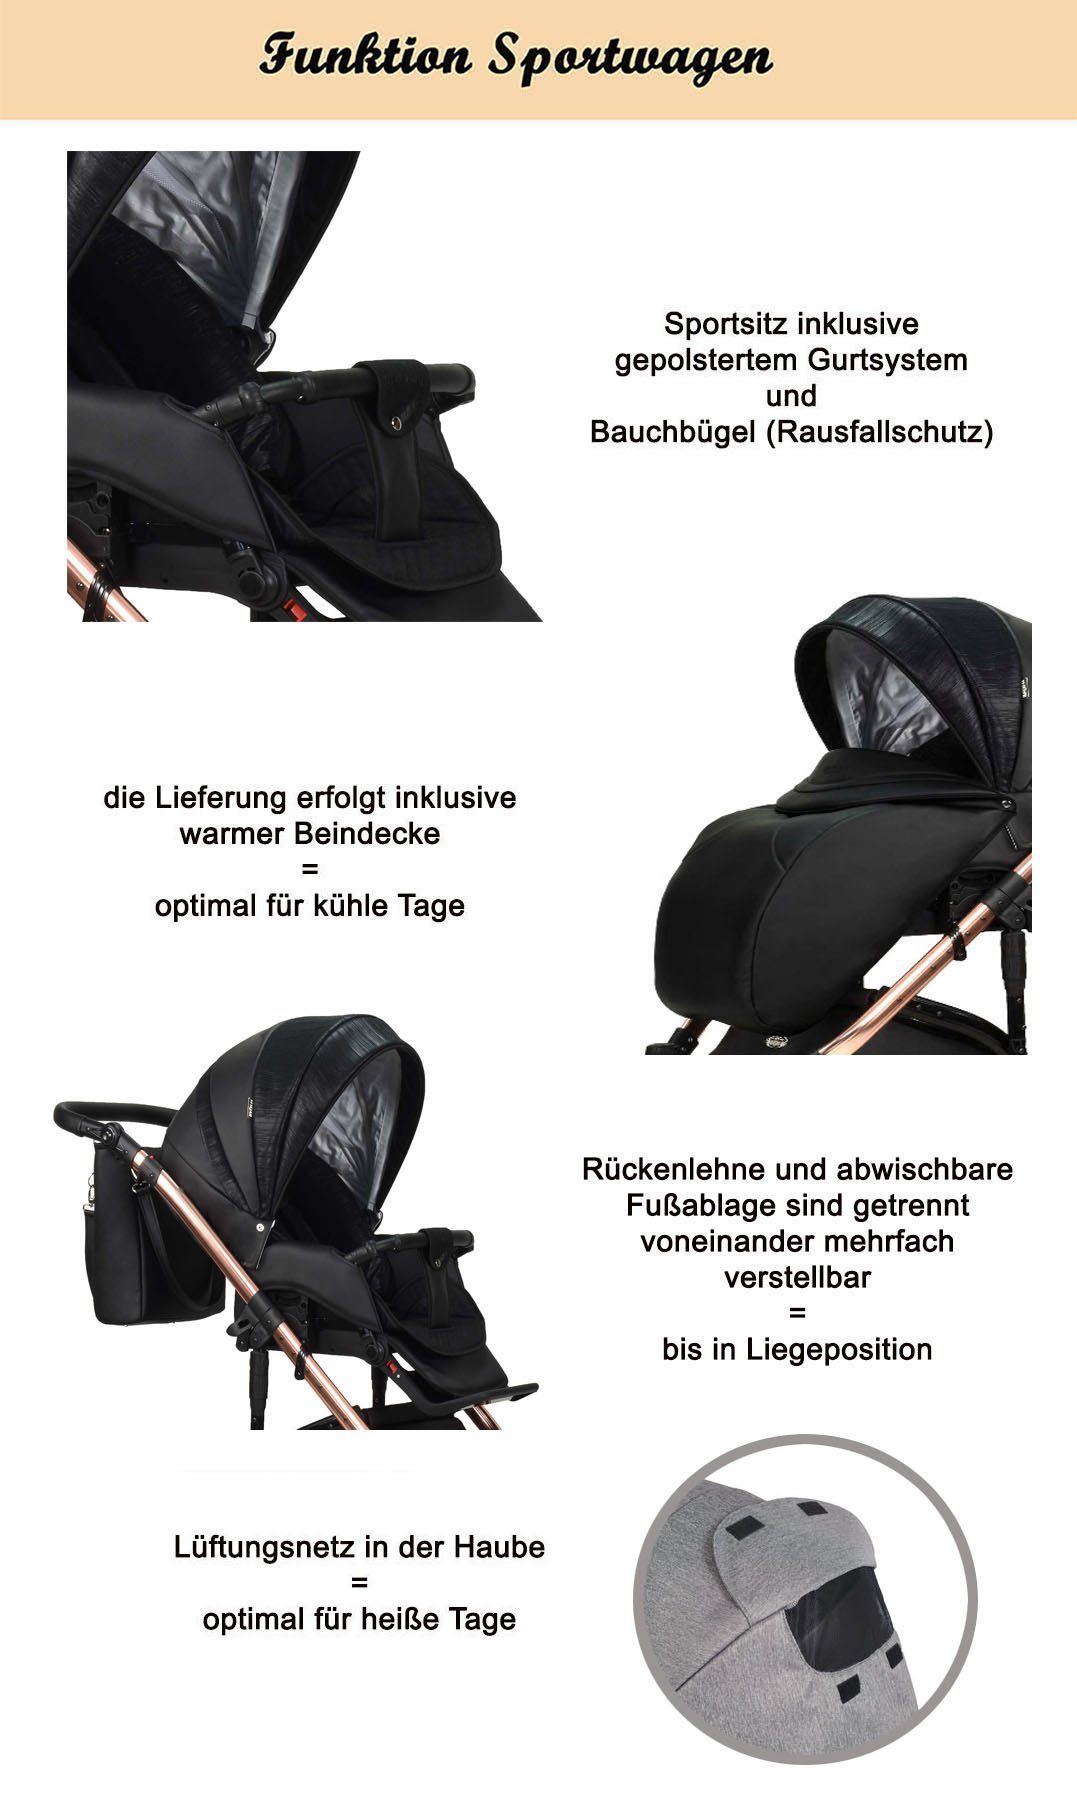 Farben in babies-on-wheels 2 - 11 Vip 16 Kombi-Kinderwagen 1 in Lux Teile - Kinderwagen-Set Blau-Kupfer